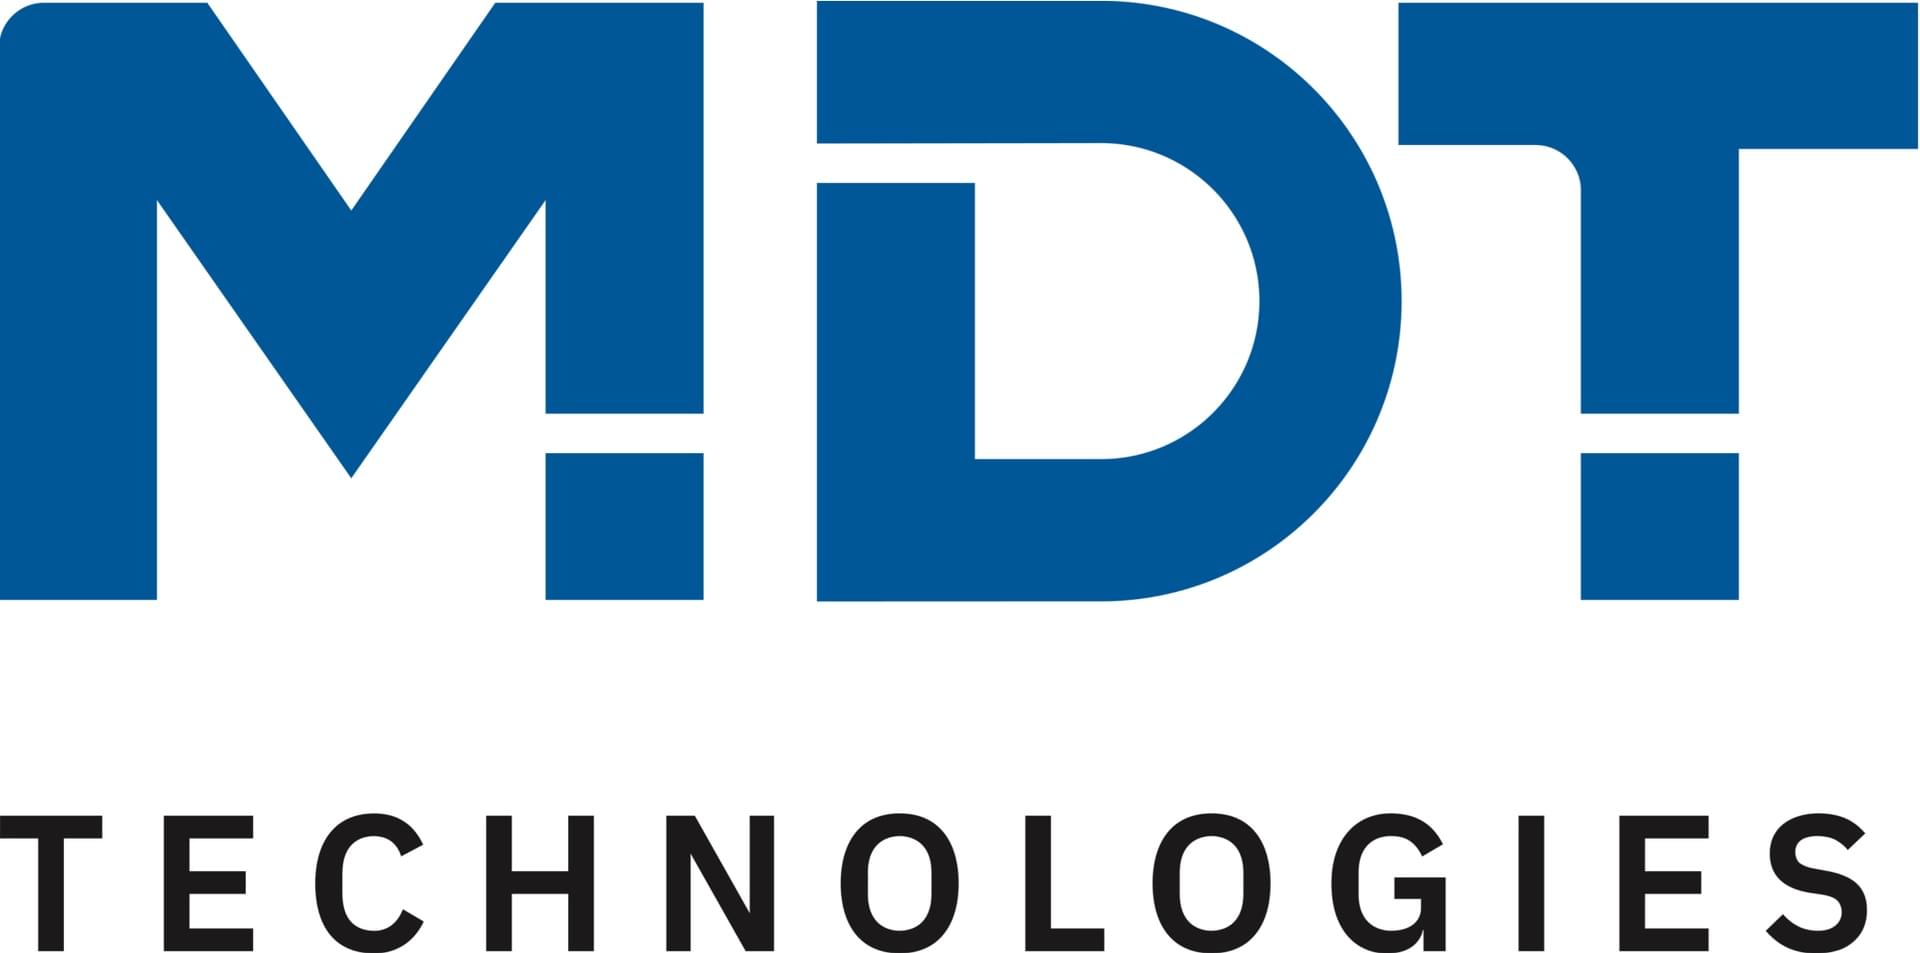 MDT Technologies